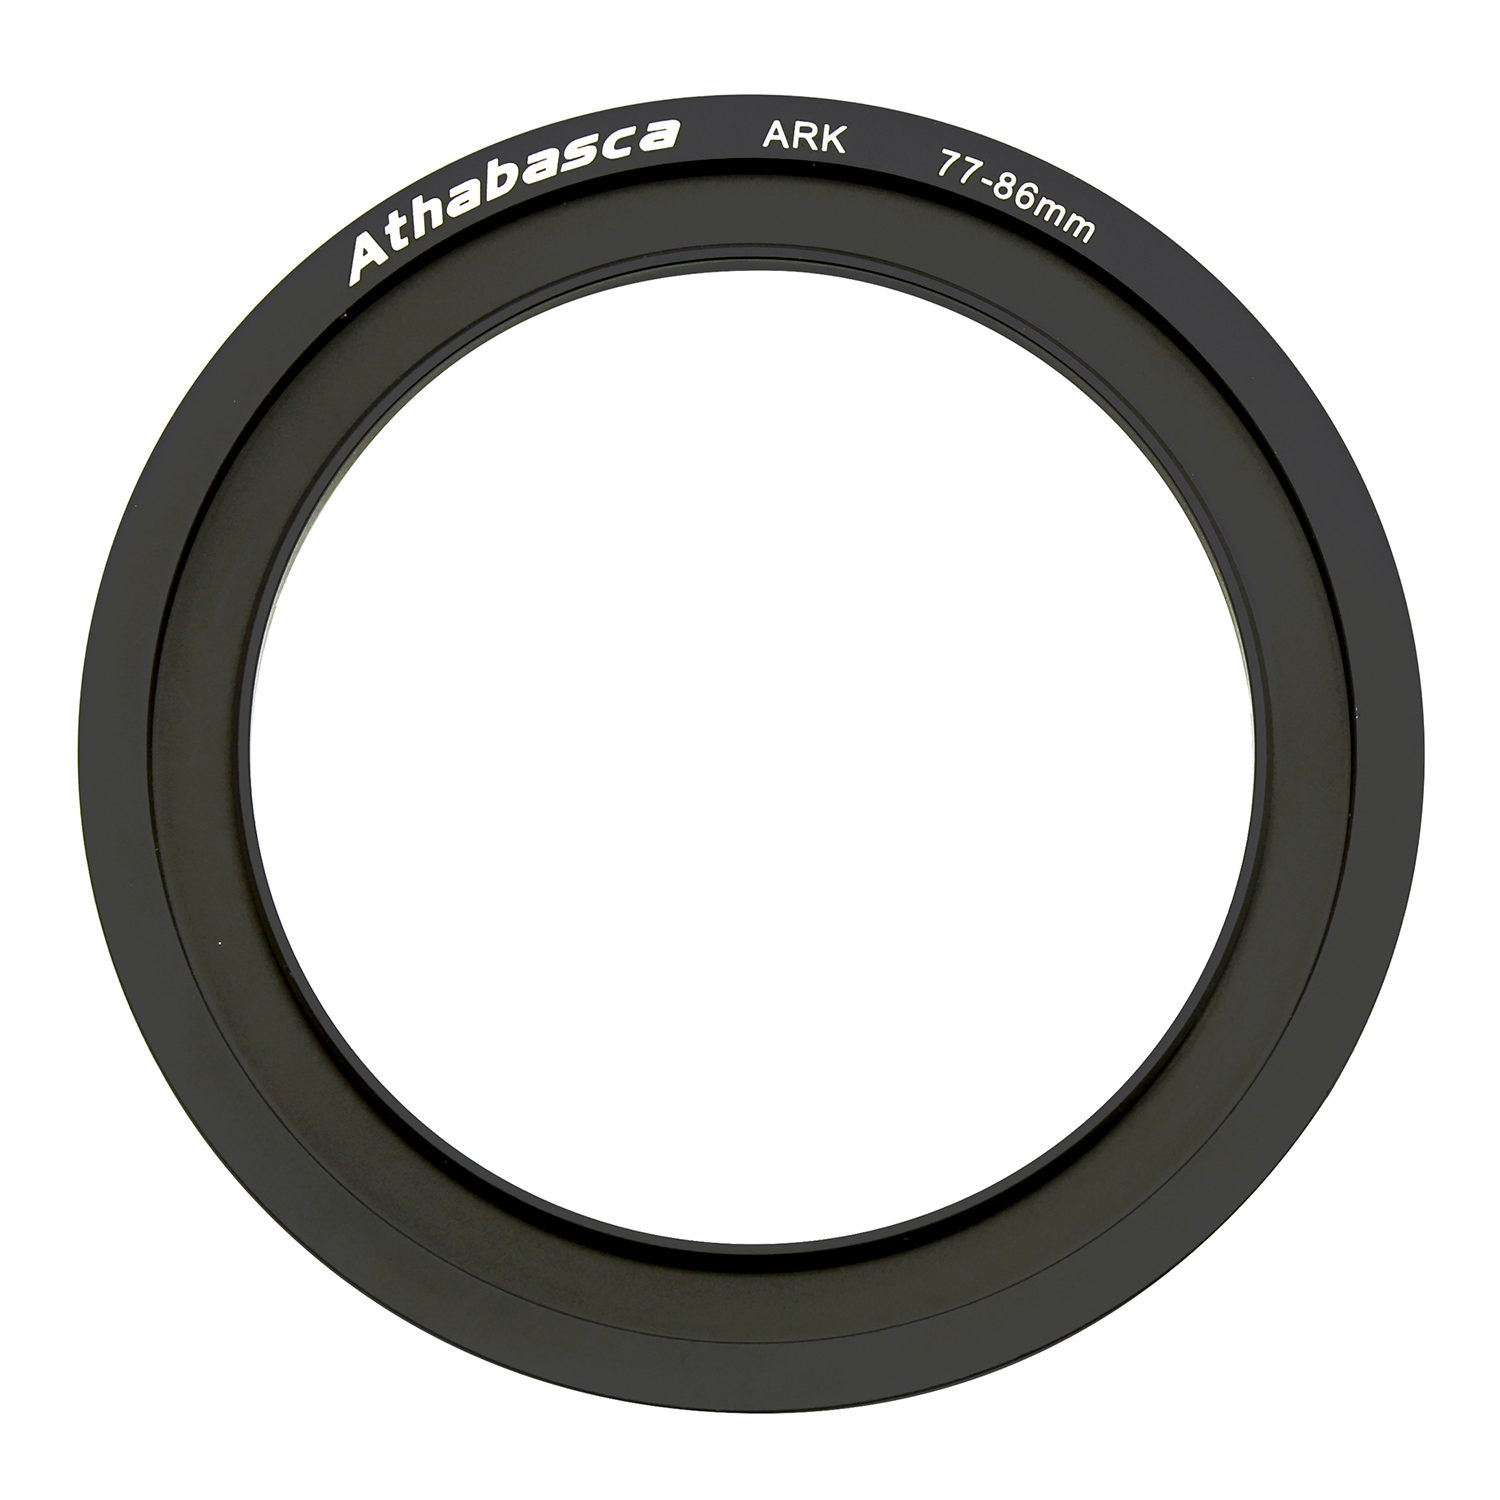 Image of Athabasca Ark Adapterring voor filterhouder 77-86mm